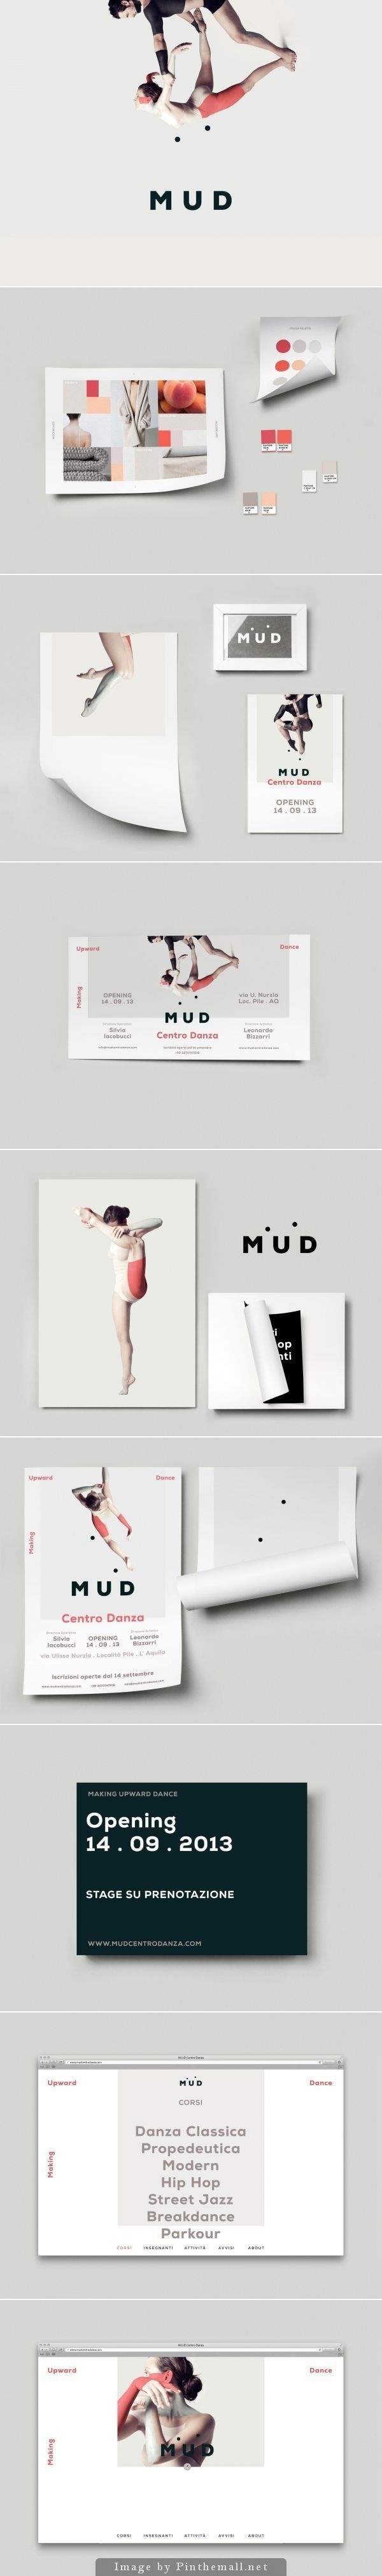 MUD #brand #identity